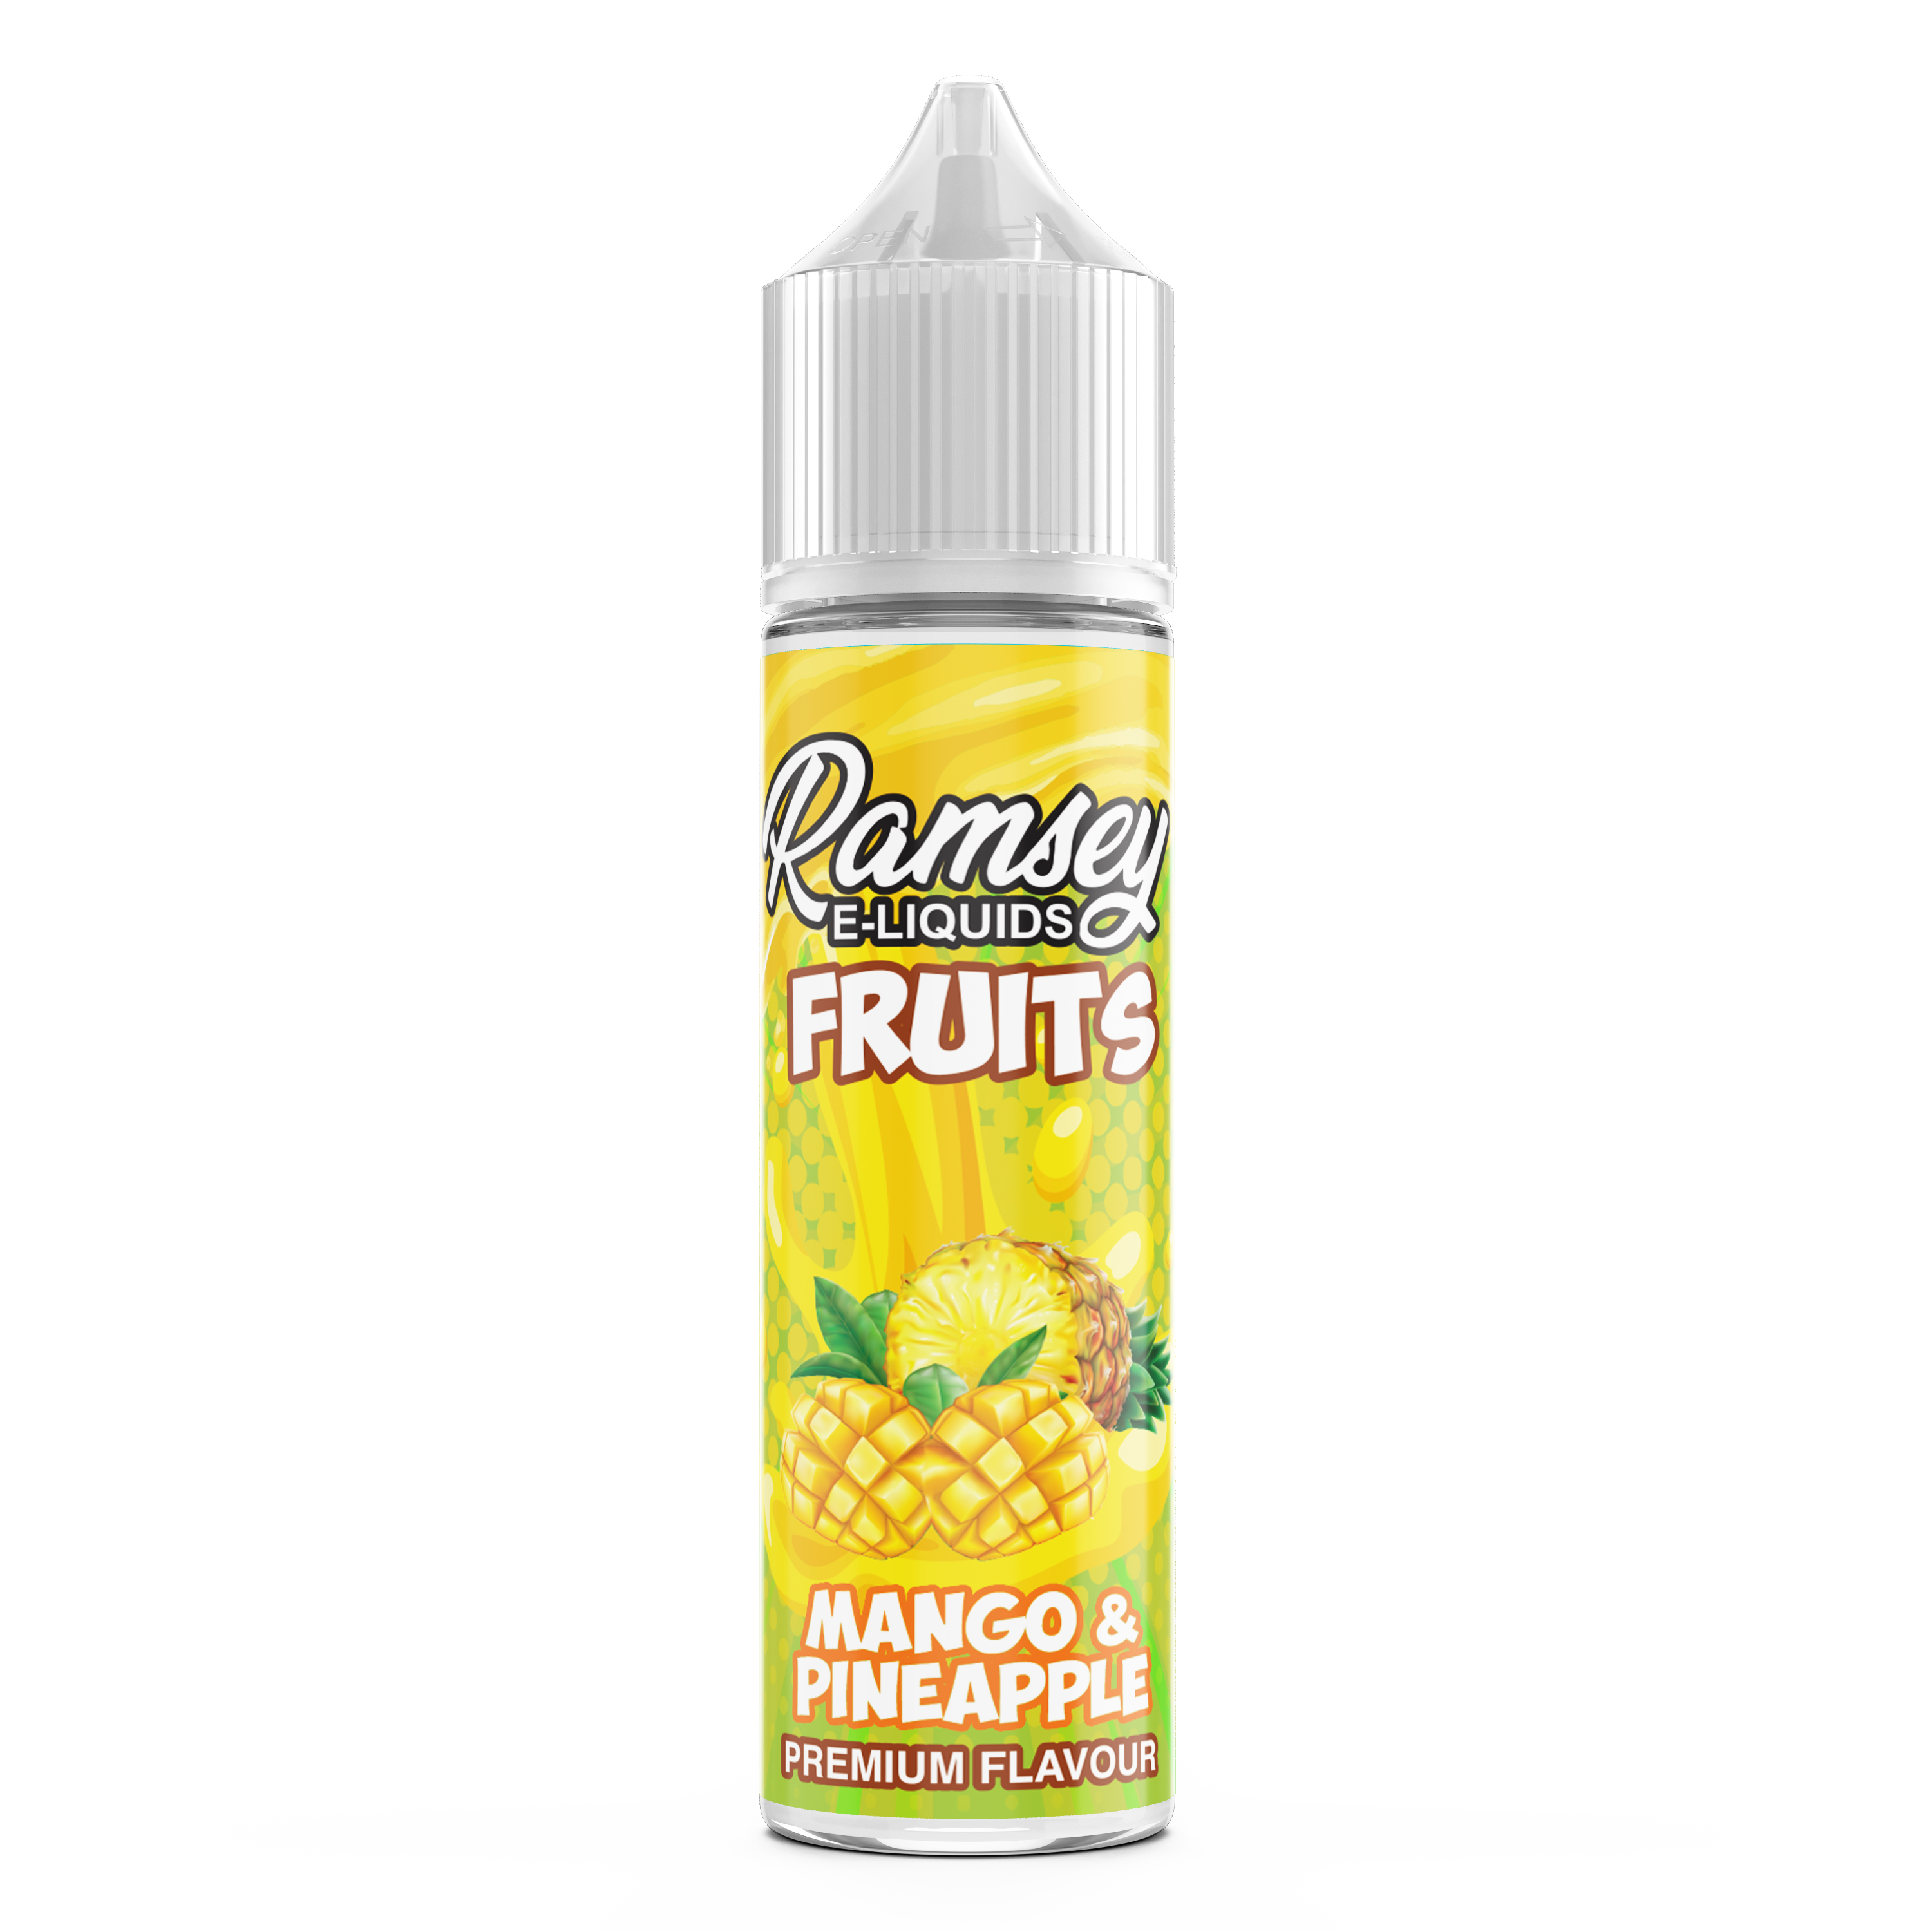 Ramsey E-Liquids Fruits: Mango & Pineapple  0mg 50ml Shortfill E-Liquid